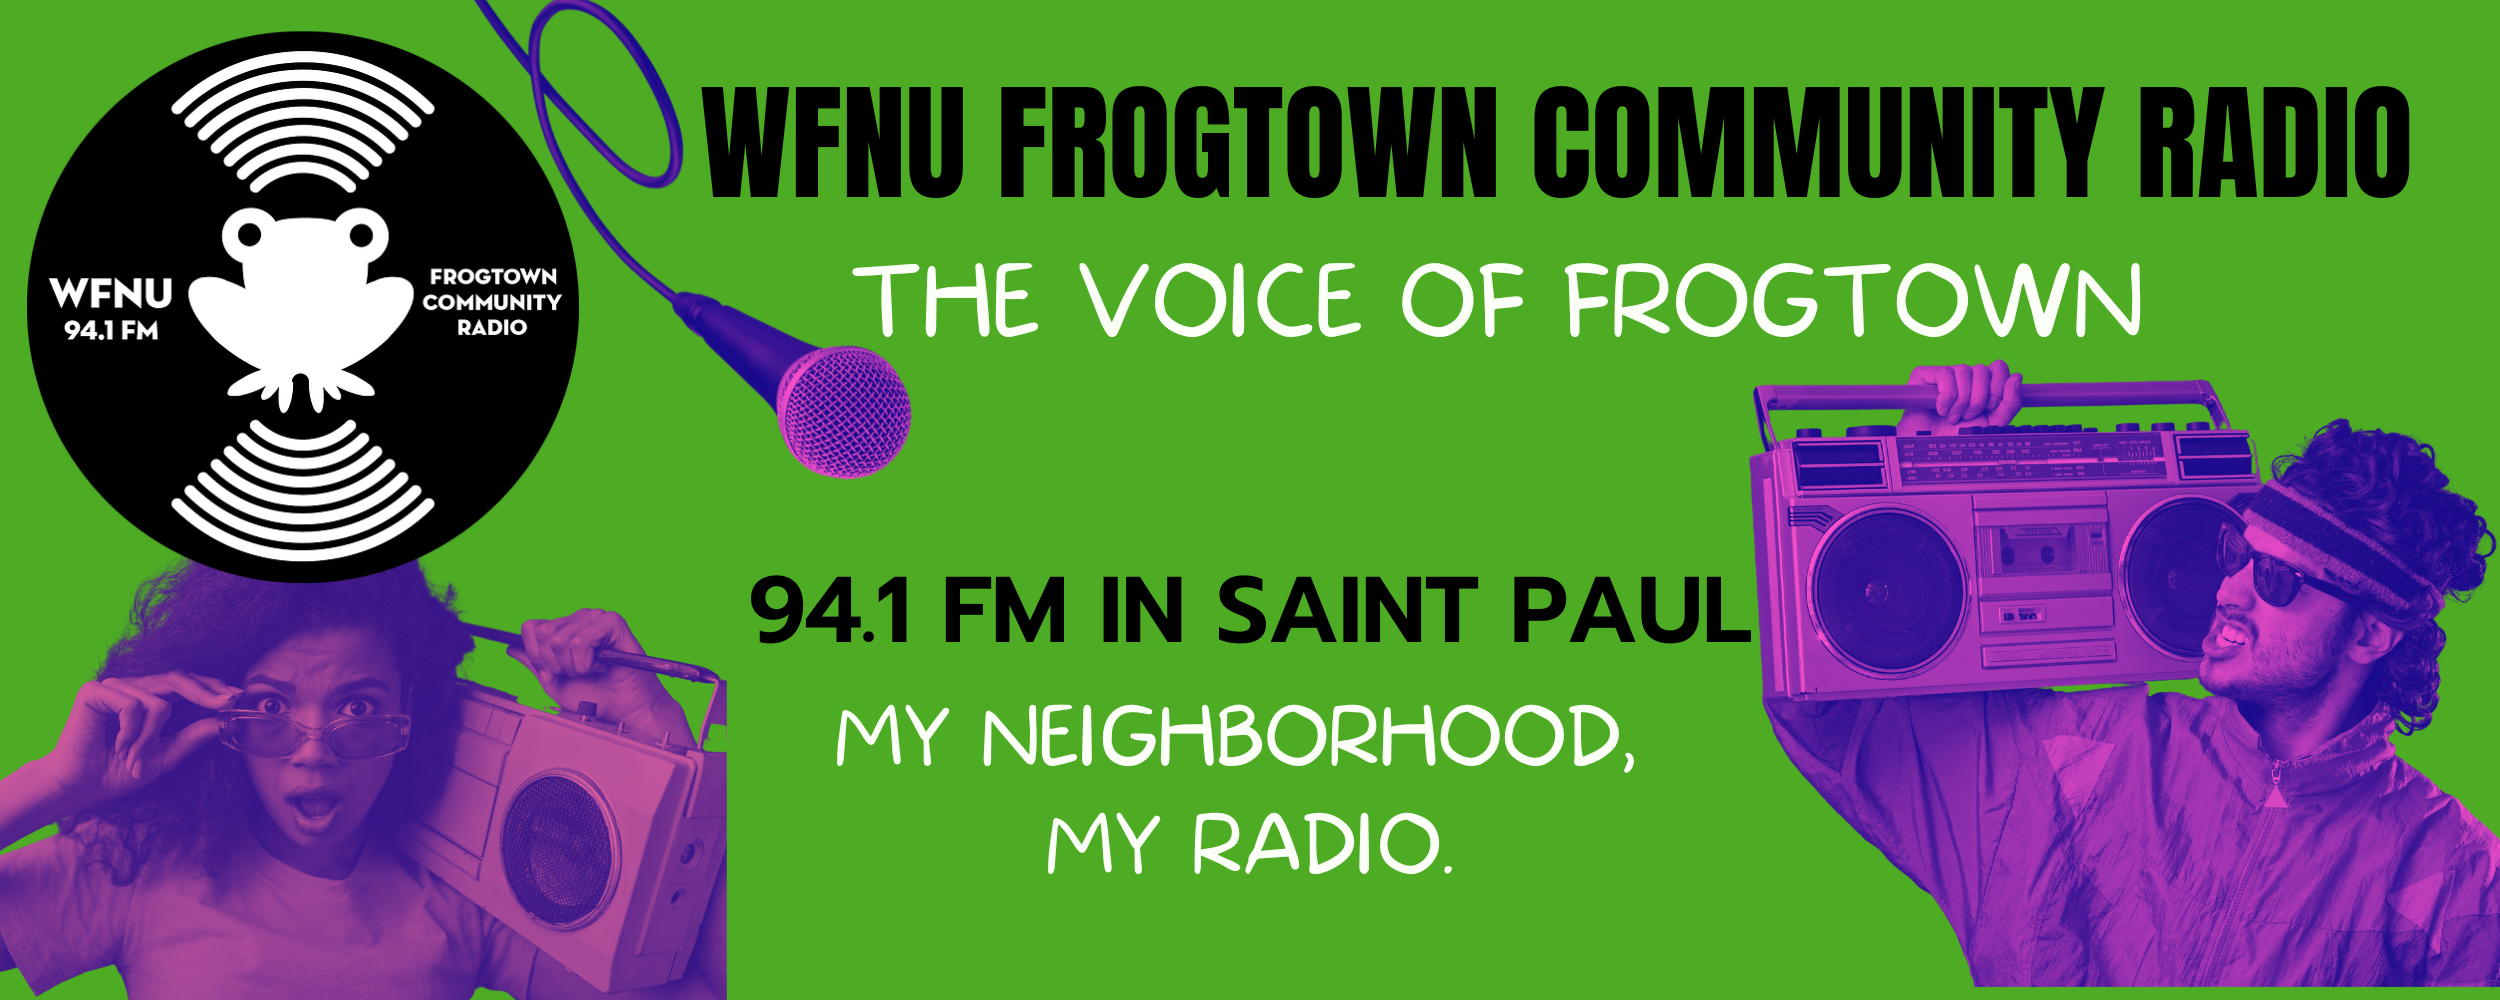 WFNU Frogtown Community Radio